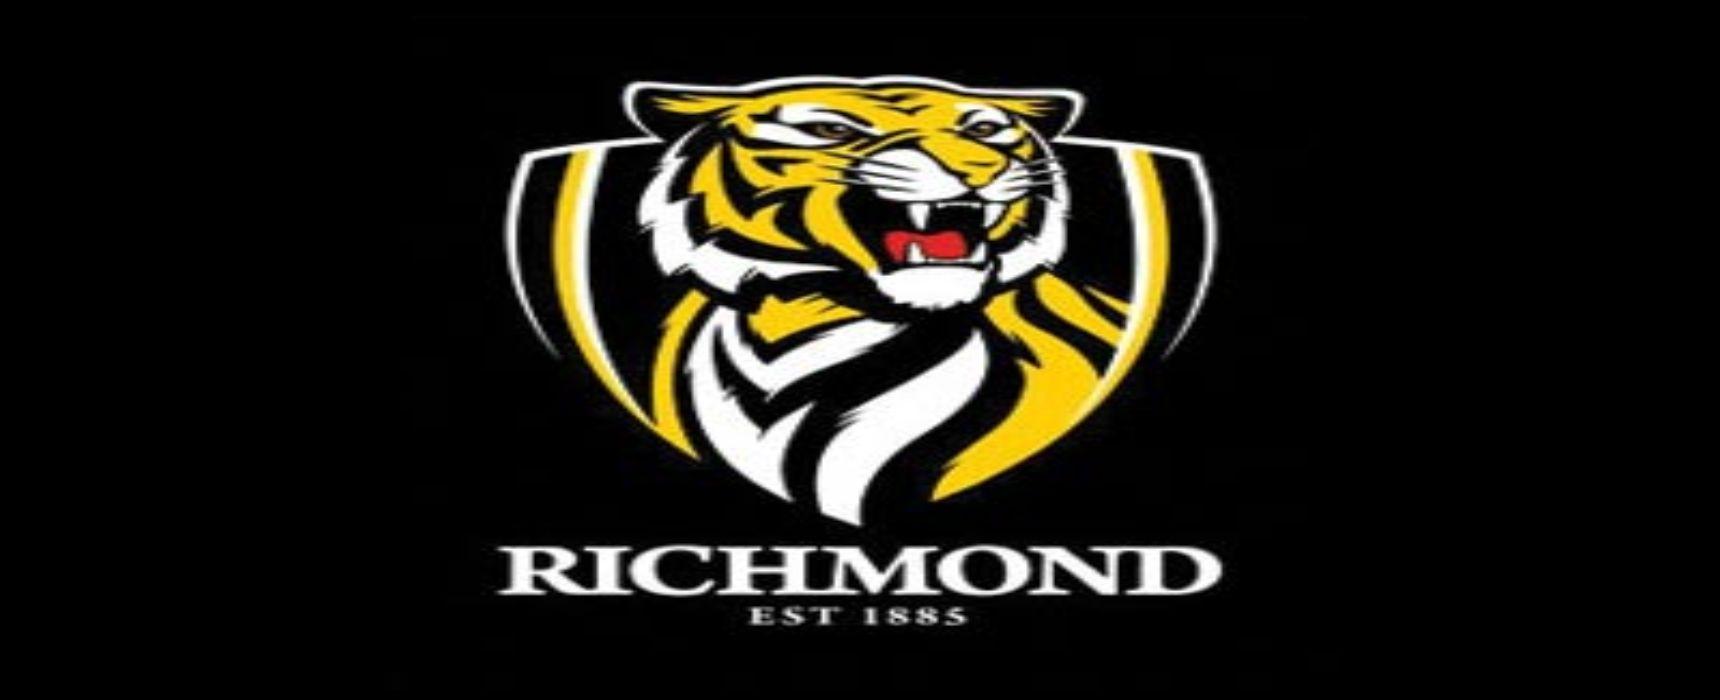 Richmond Logo - Richmond Football Club logo launch 2011